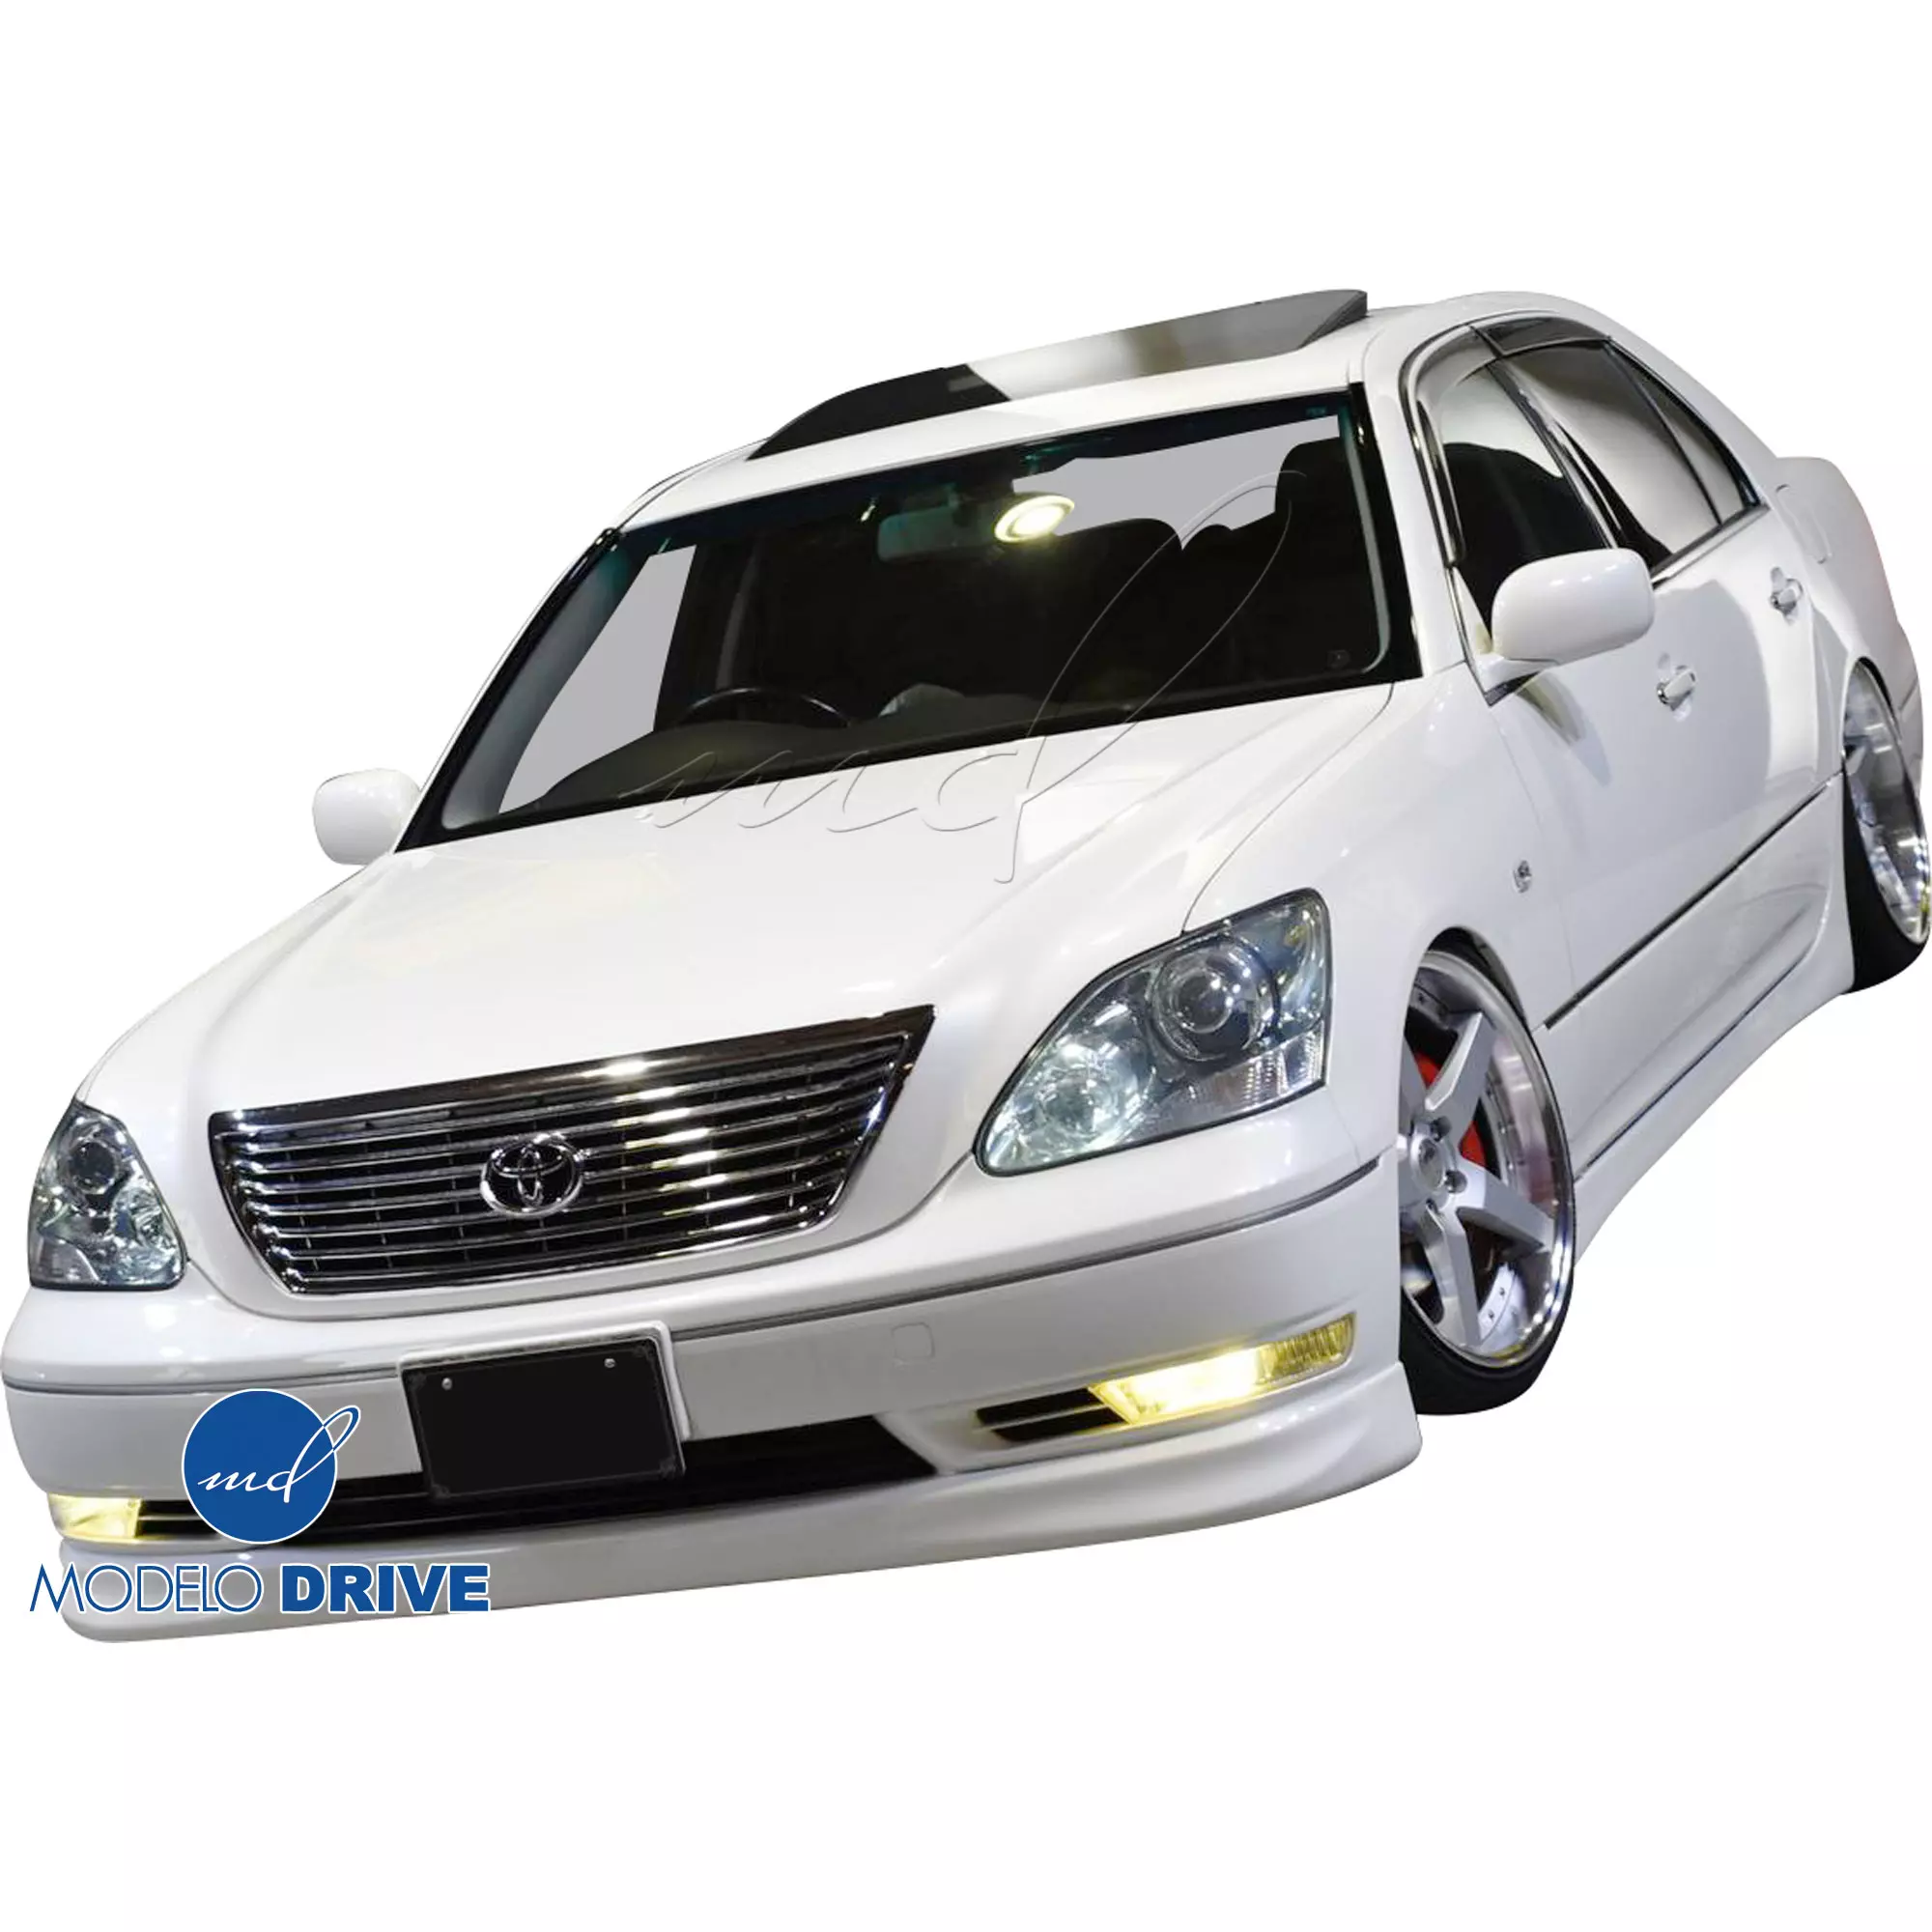 ModeloDrive FRP ARTI Body Kit 4pc (short wheelbase) > Lexus LS Series LS430 UCF31 2004-2006 - Image 9